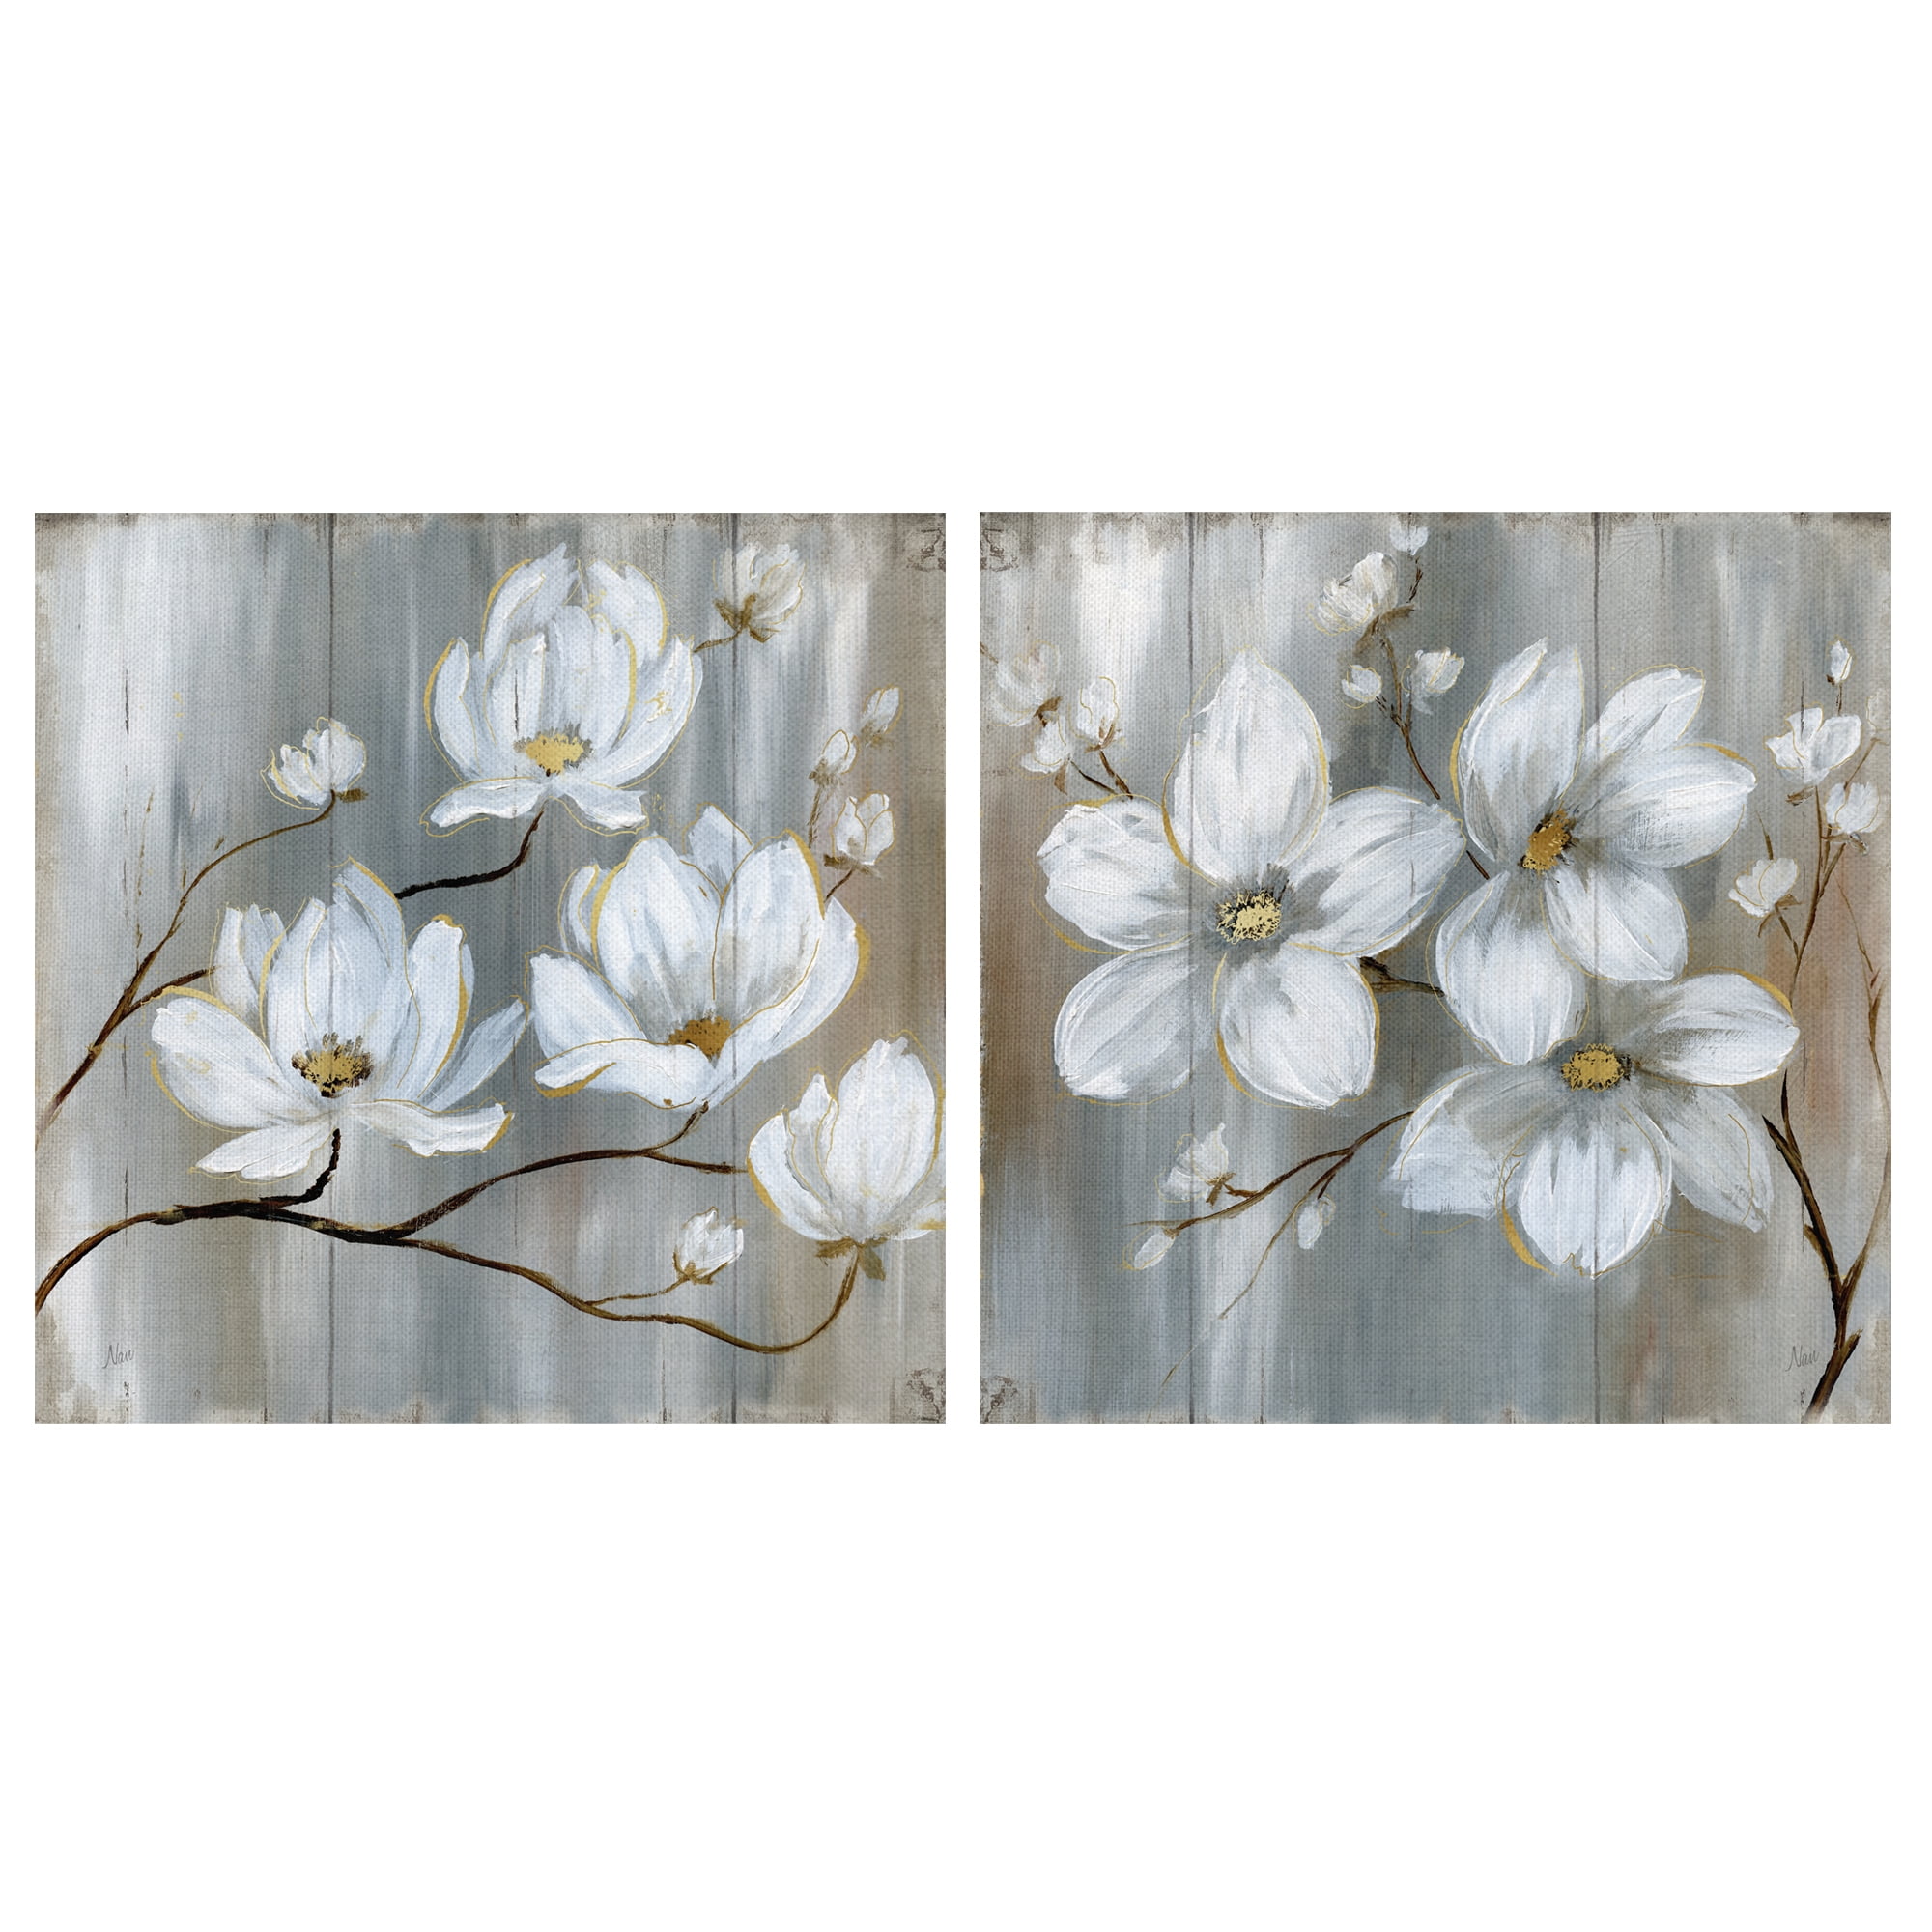 Earthy Paperwhites II” - 11x14 - Canvas